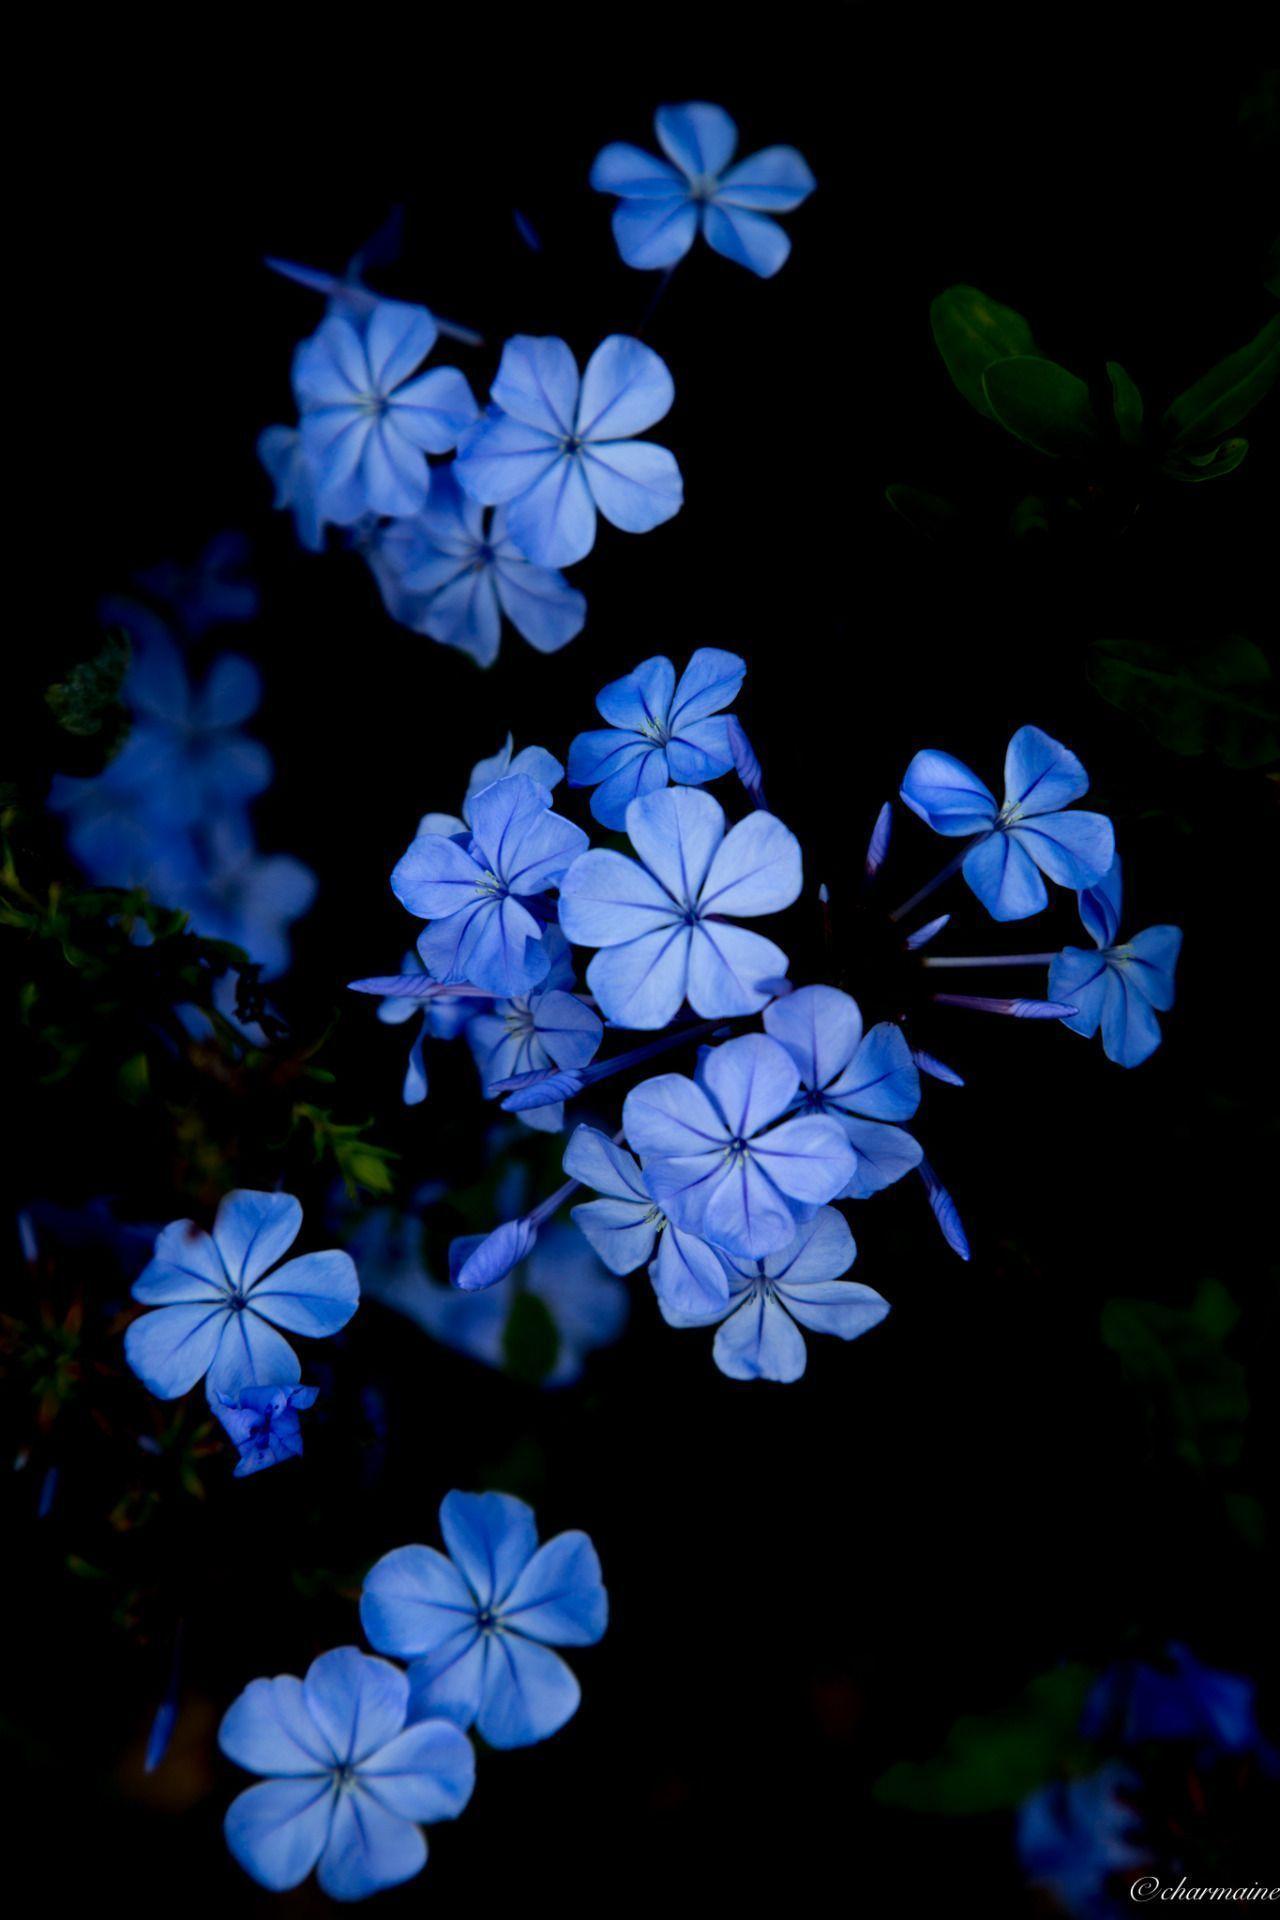 Dark Blue Floral Wallpapers - Top Free Dark Blue Floral Backgrounds